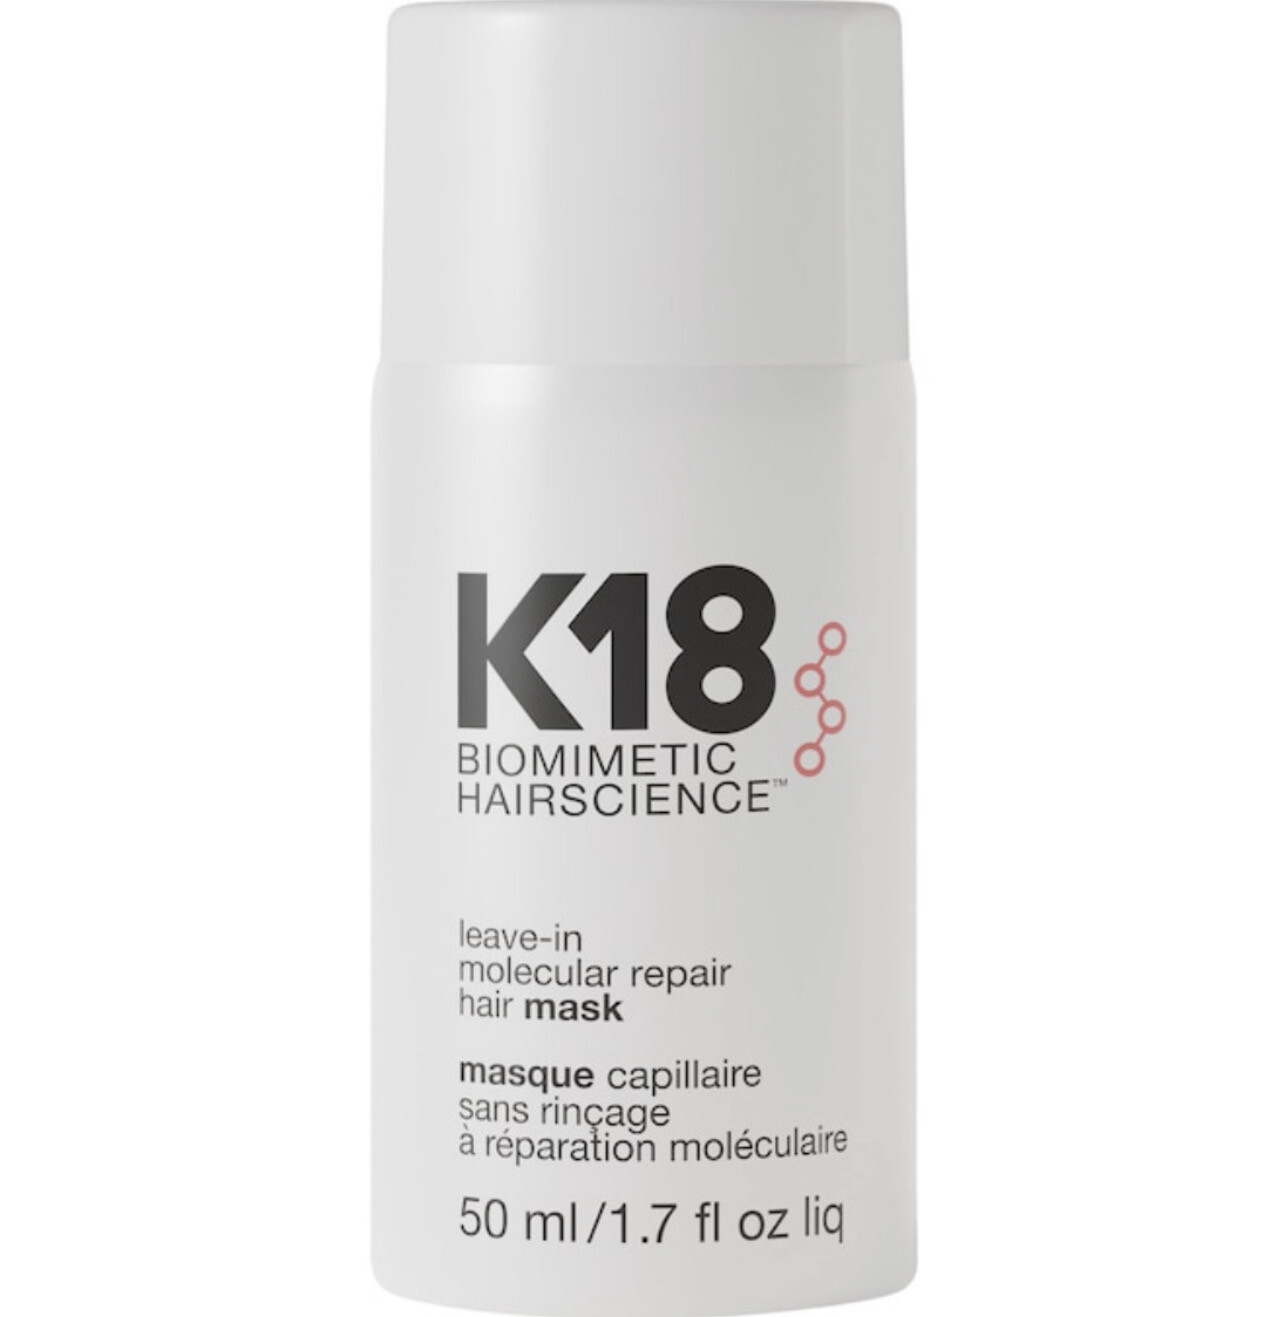 K18 Biomimetic Hairscience - Leave-In Molecular Repair Hair Mask | 50 mL